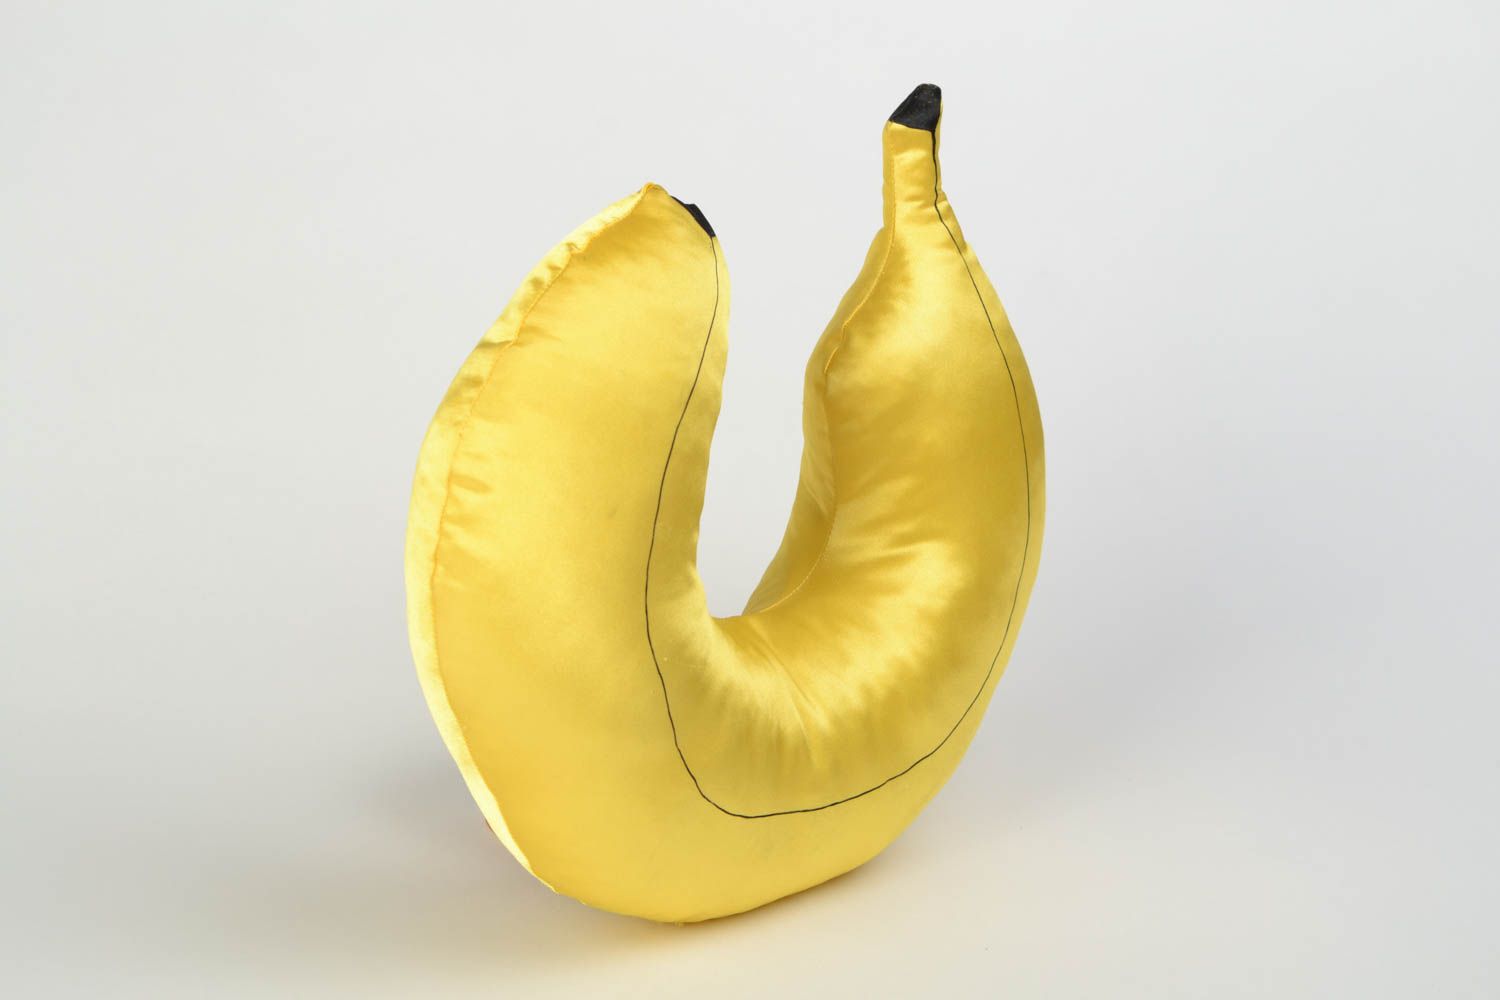 Handmade yellow satin travel pillow in the shape of banana photo 5